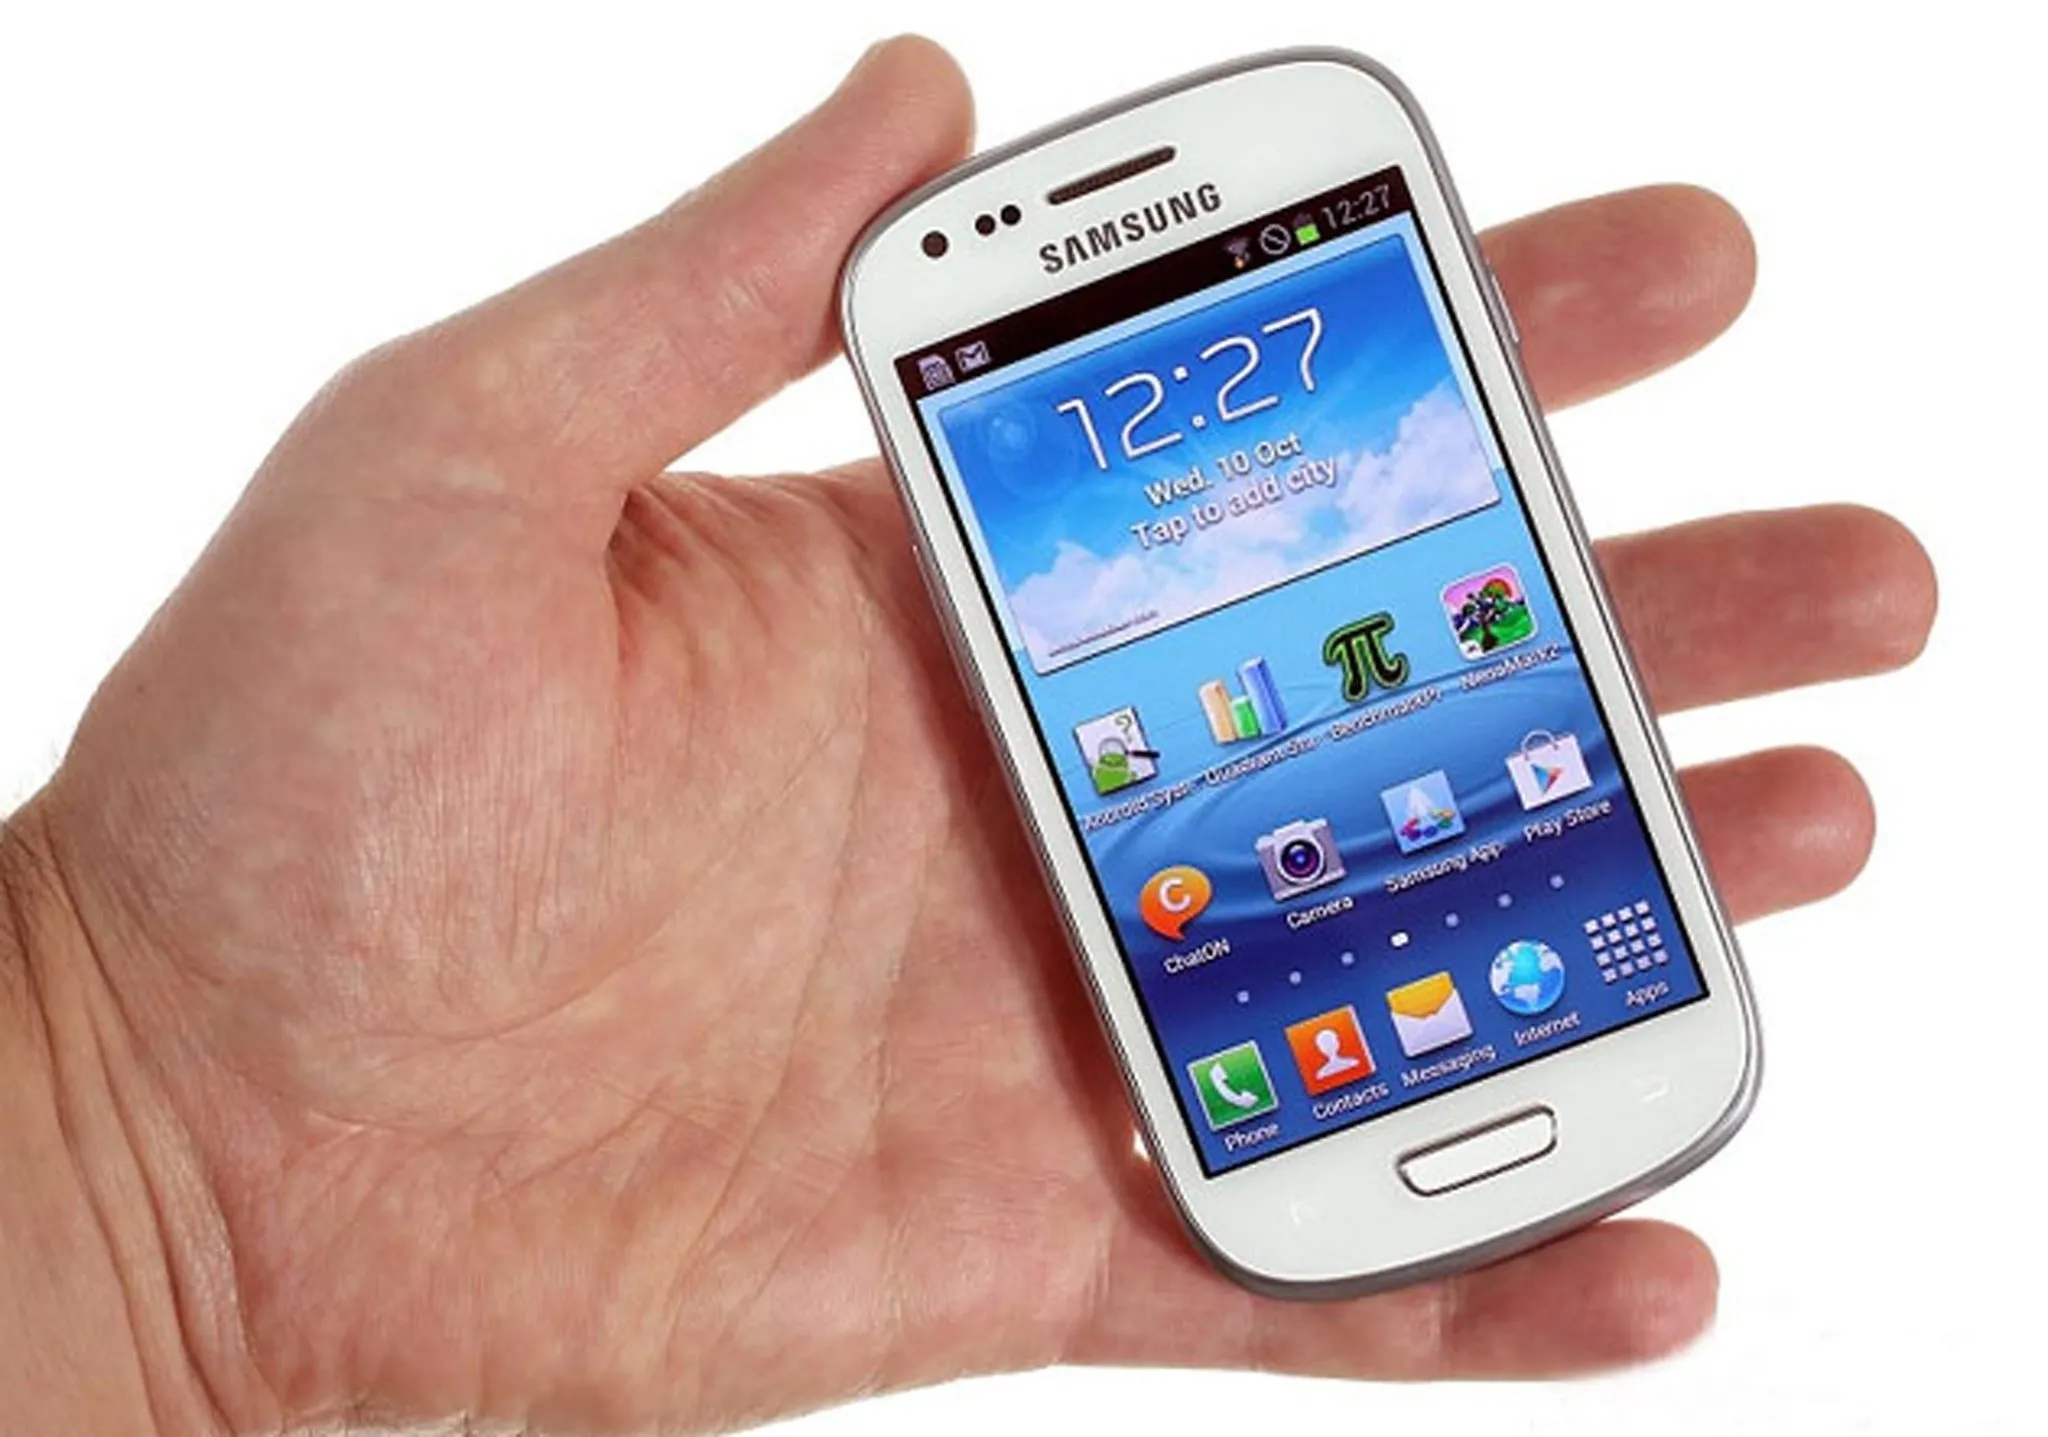 Galaxy 3 ru. Samsung s3 Mini. Samsung Galaxy s3 Mini. Самсунг галакси с 3 мини. Samsung Galaxy s III Mini.